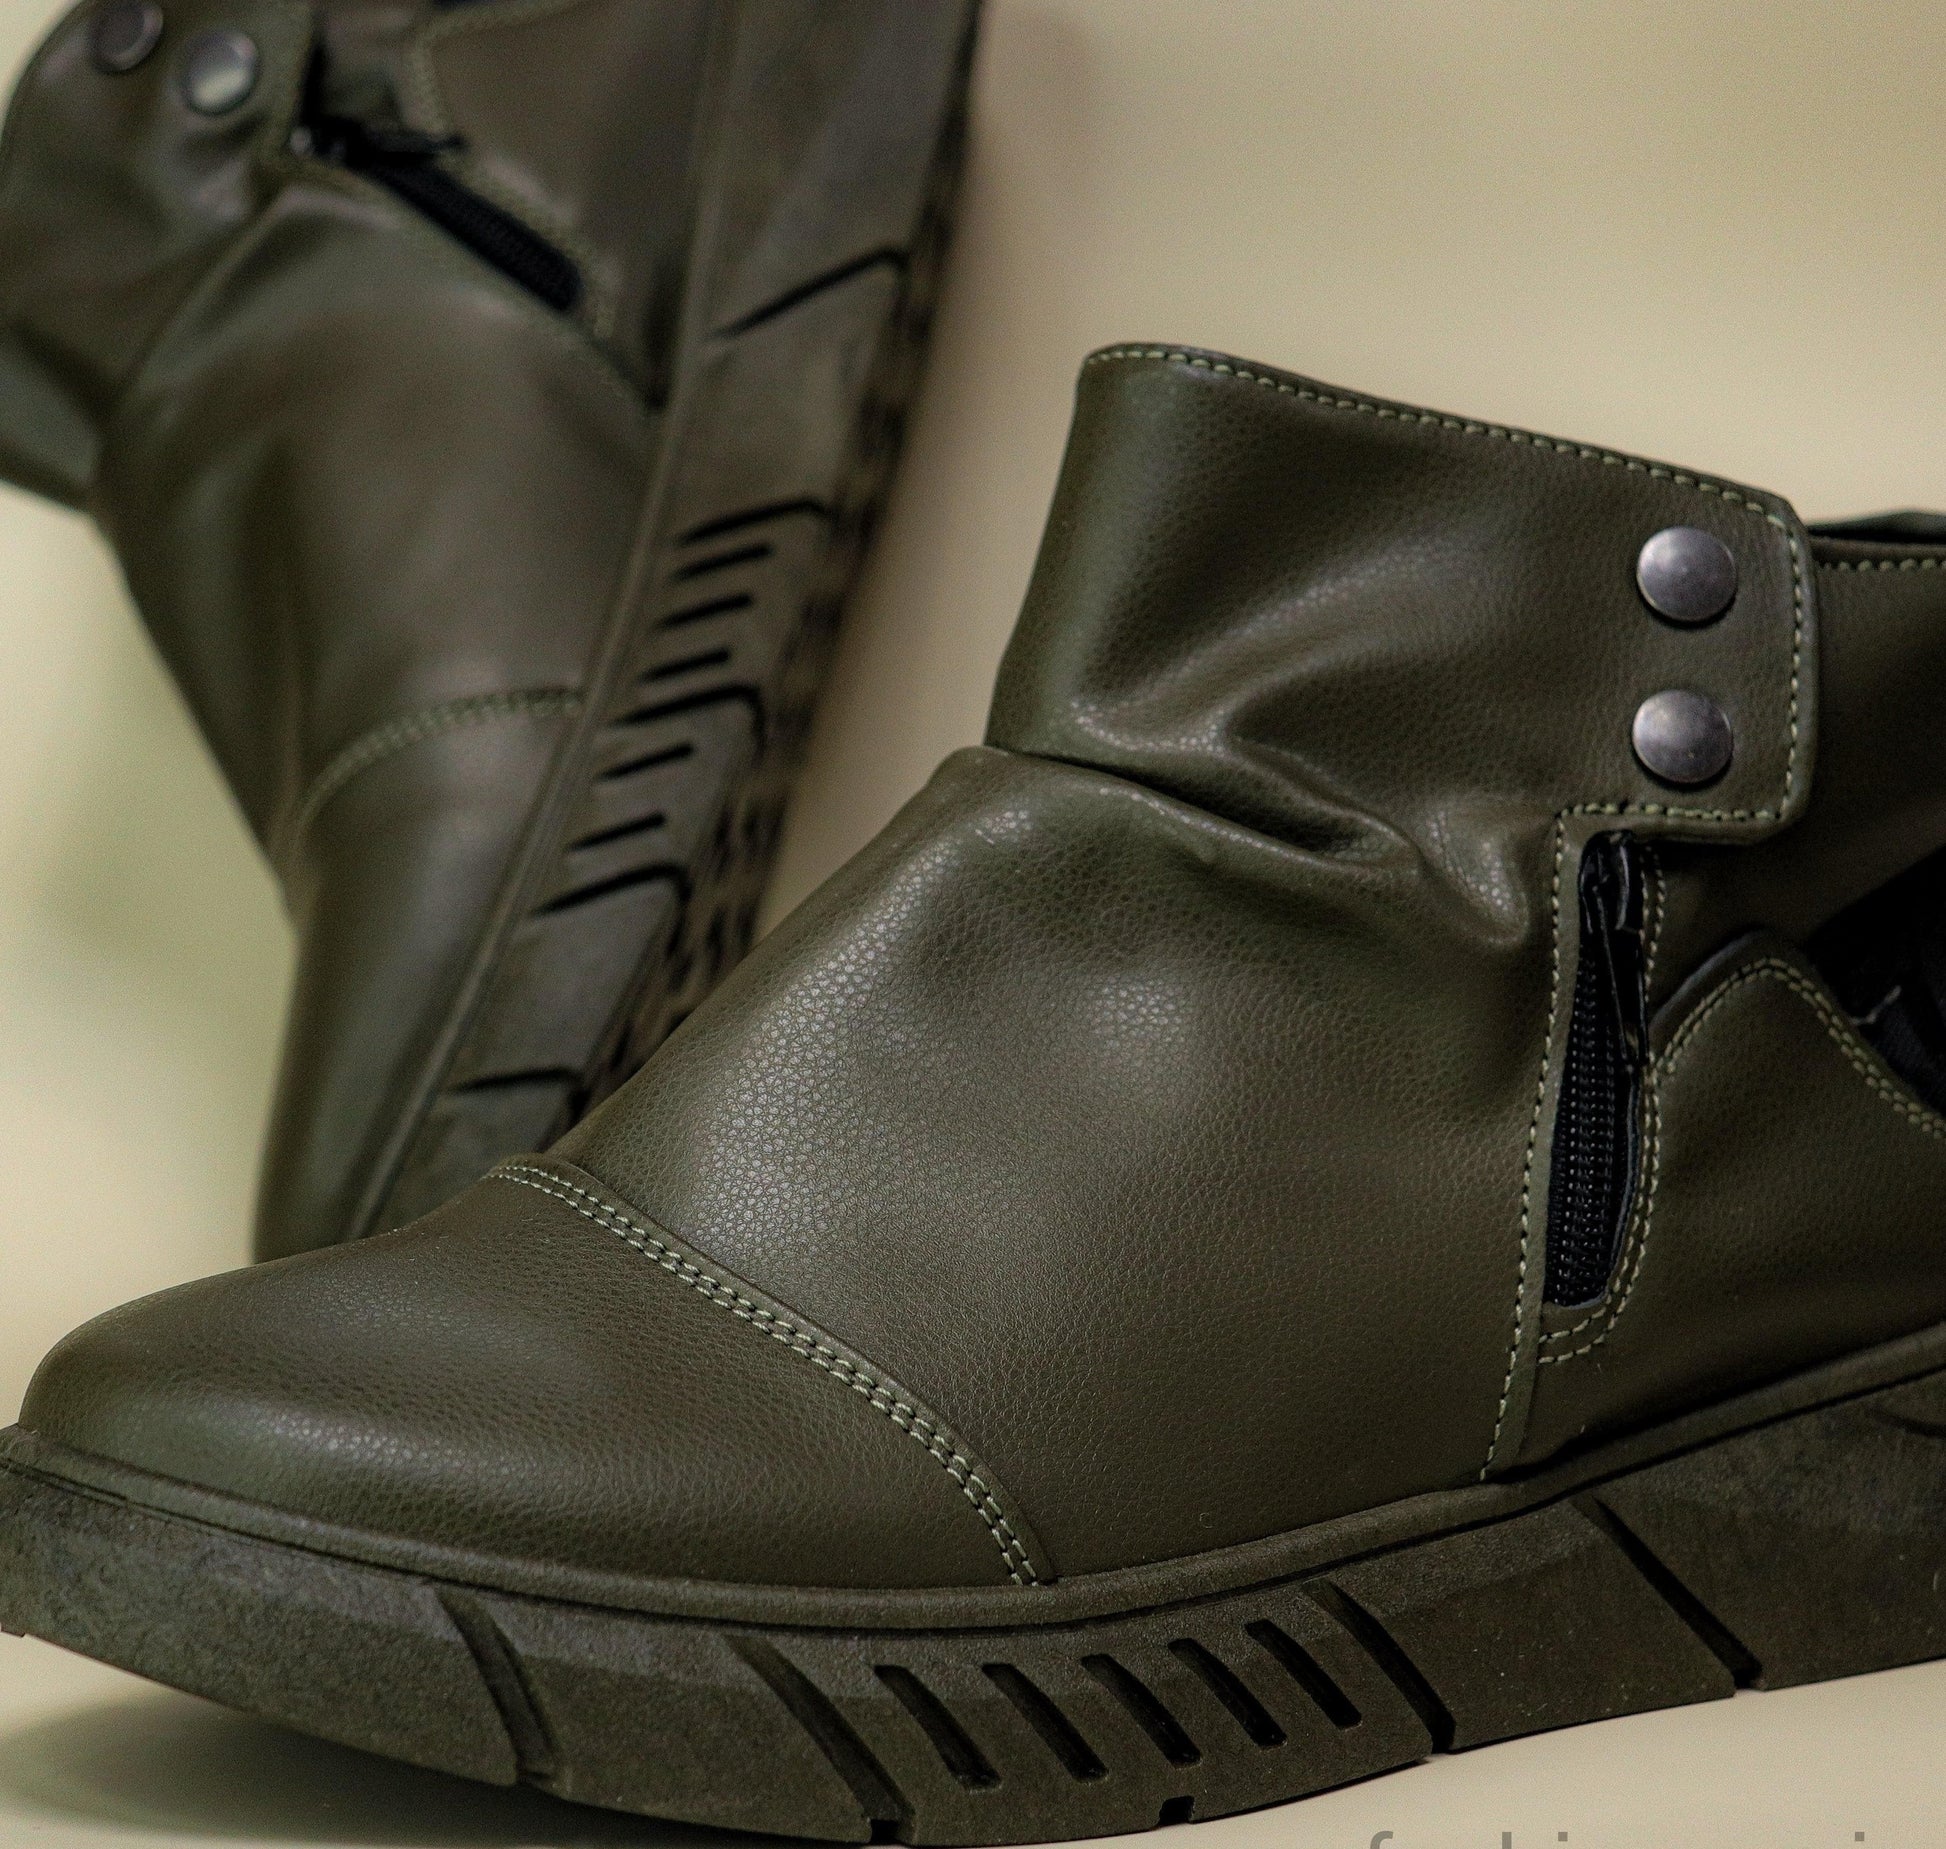 "Fashionray zipper" high casual boots shoes fashionray.in